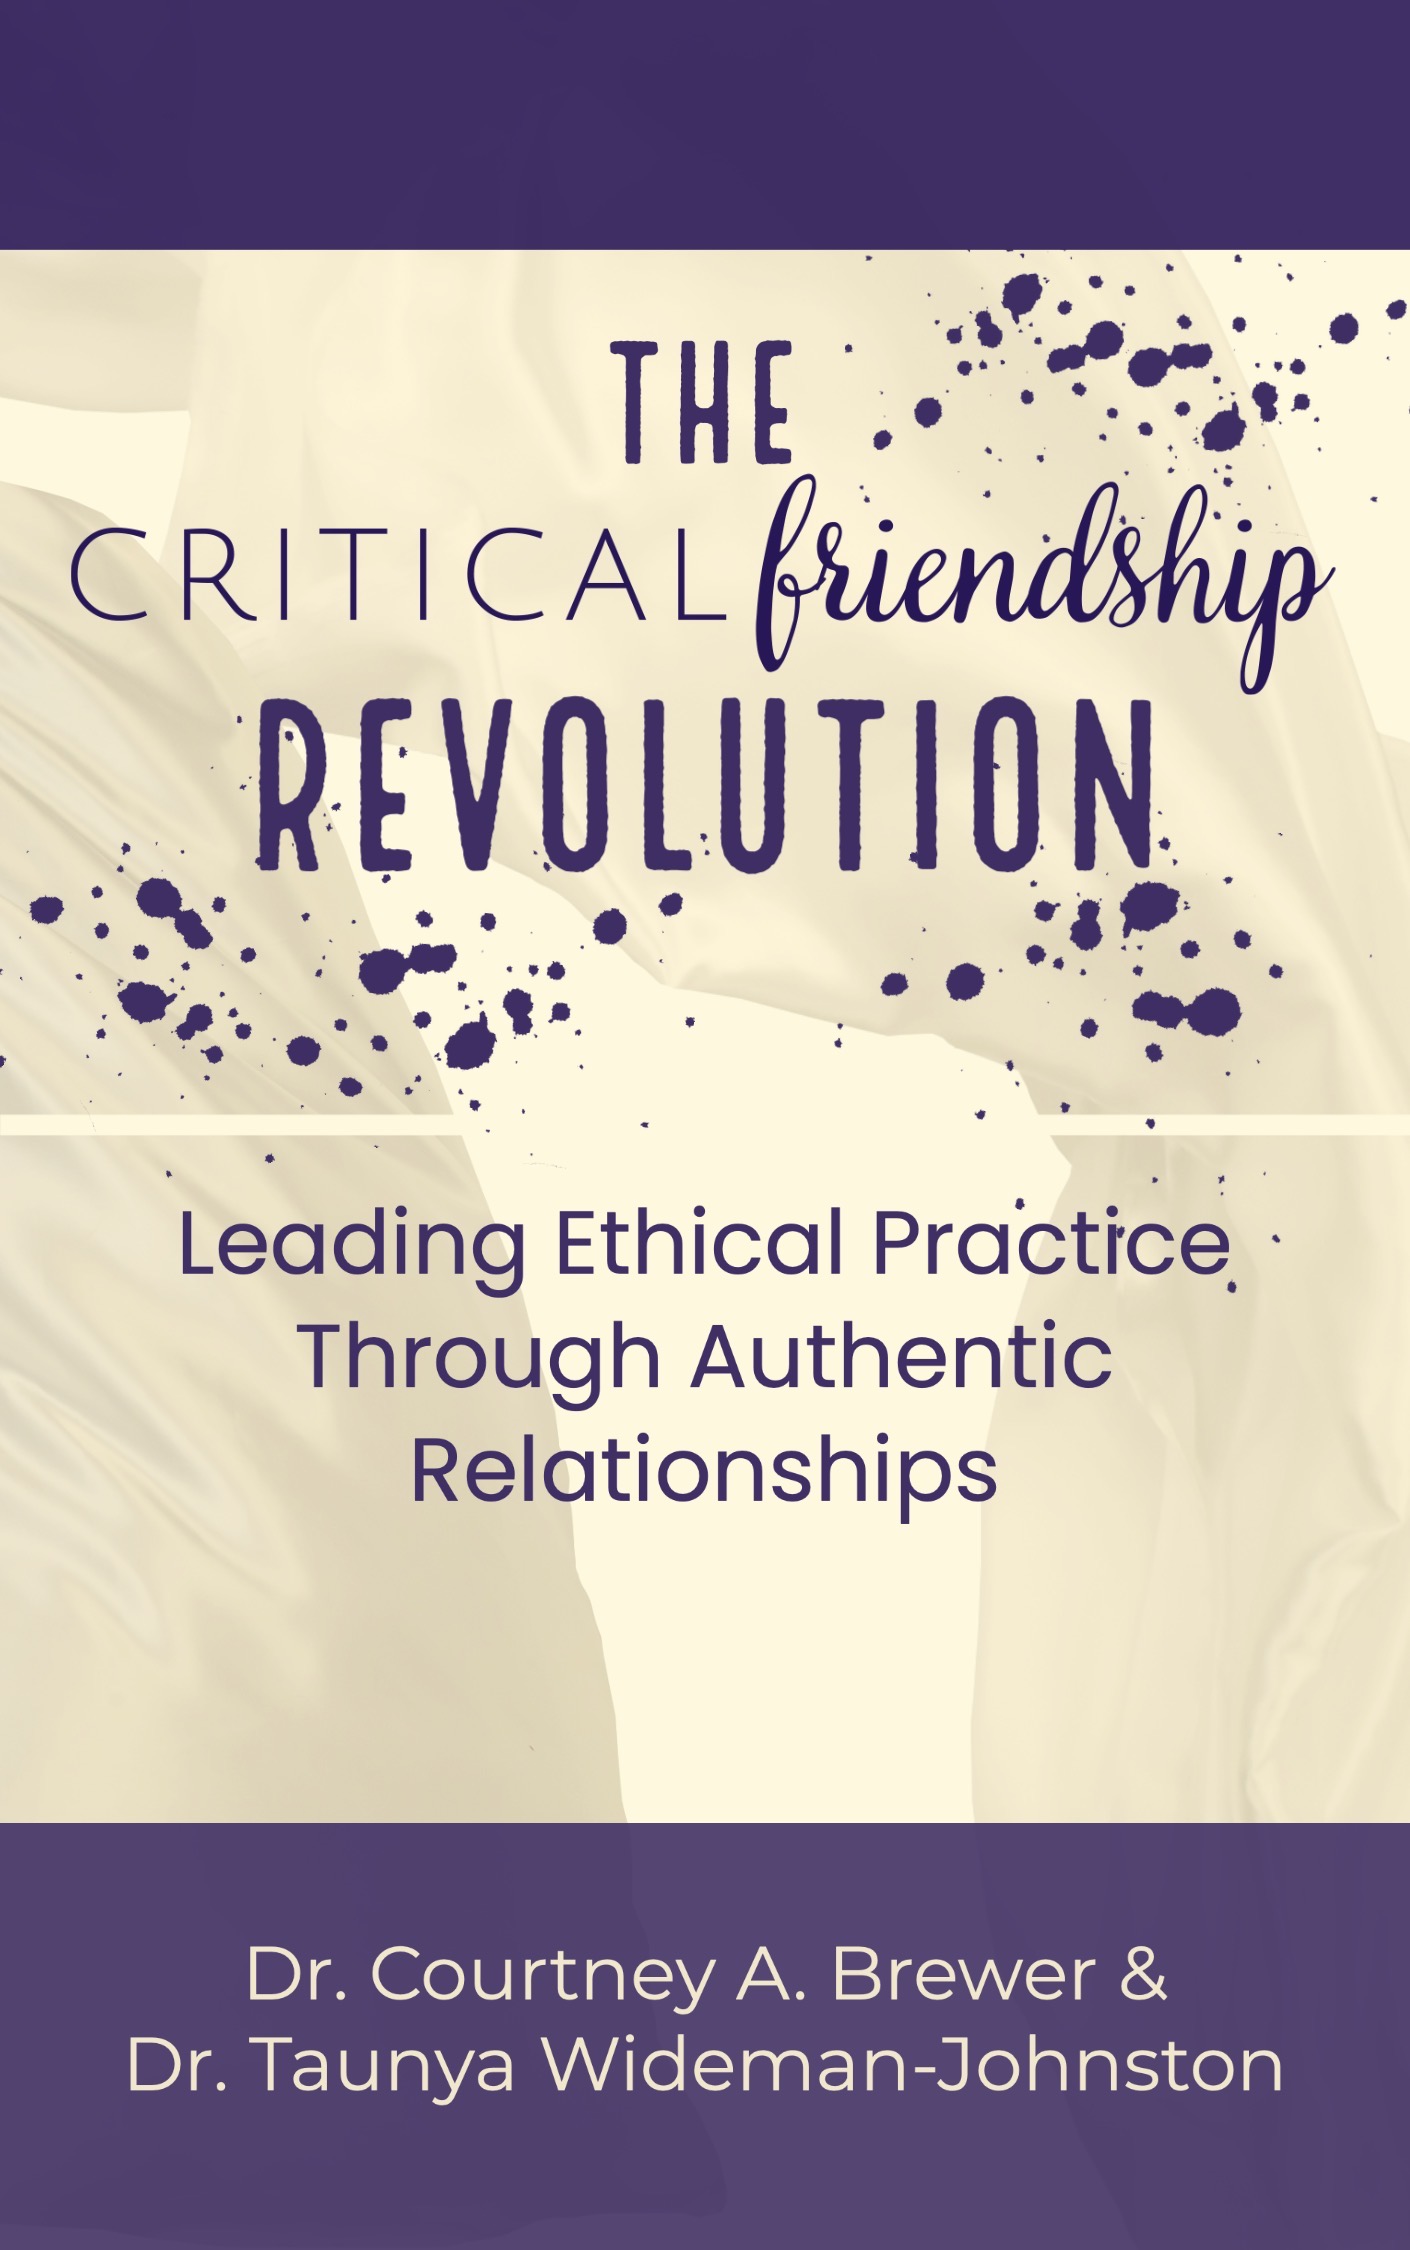 Critical Friendship book Revolution